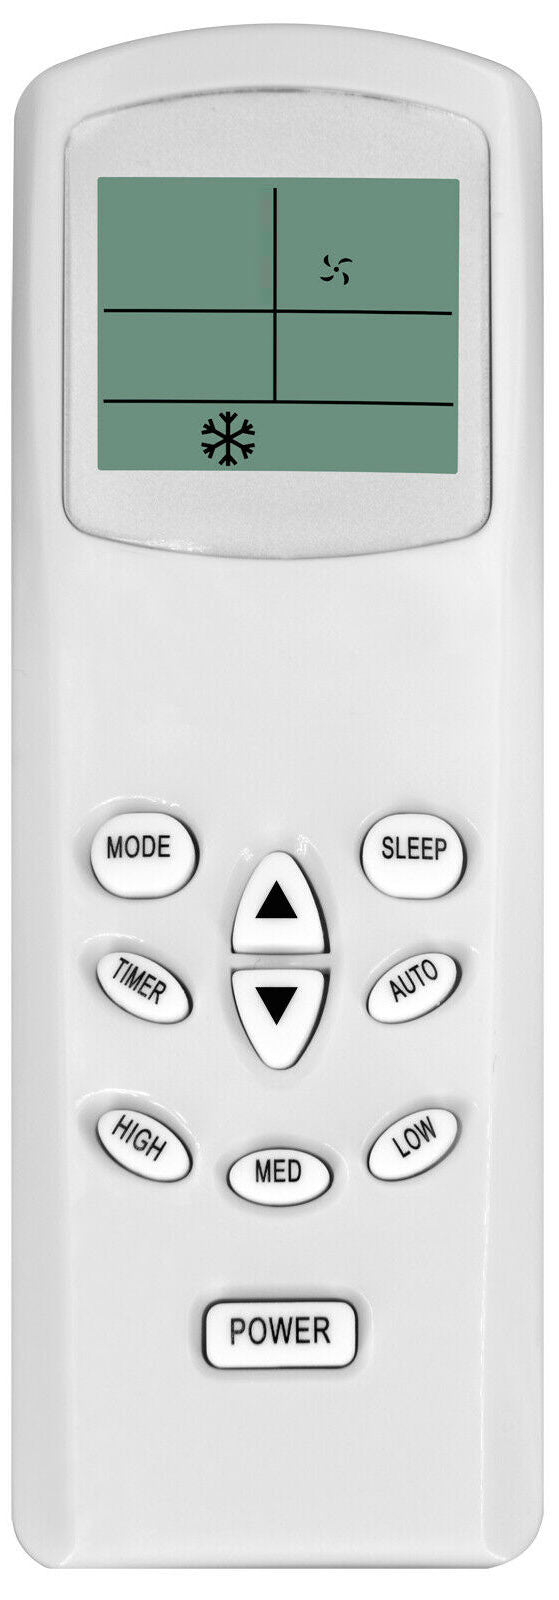 AC Remote For Dimplex